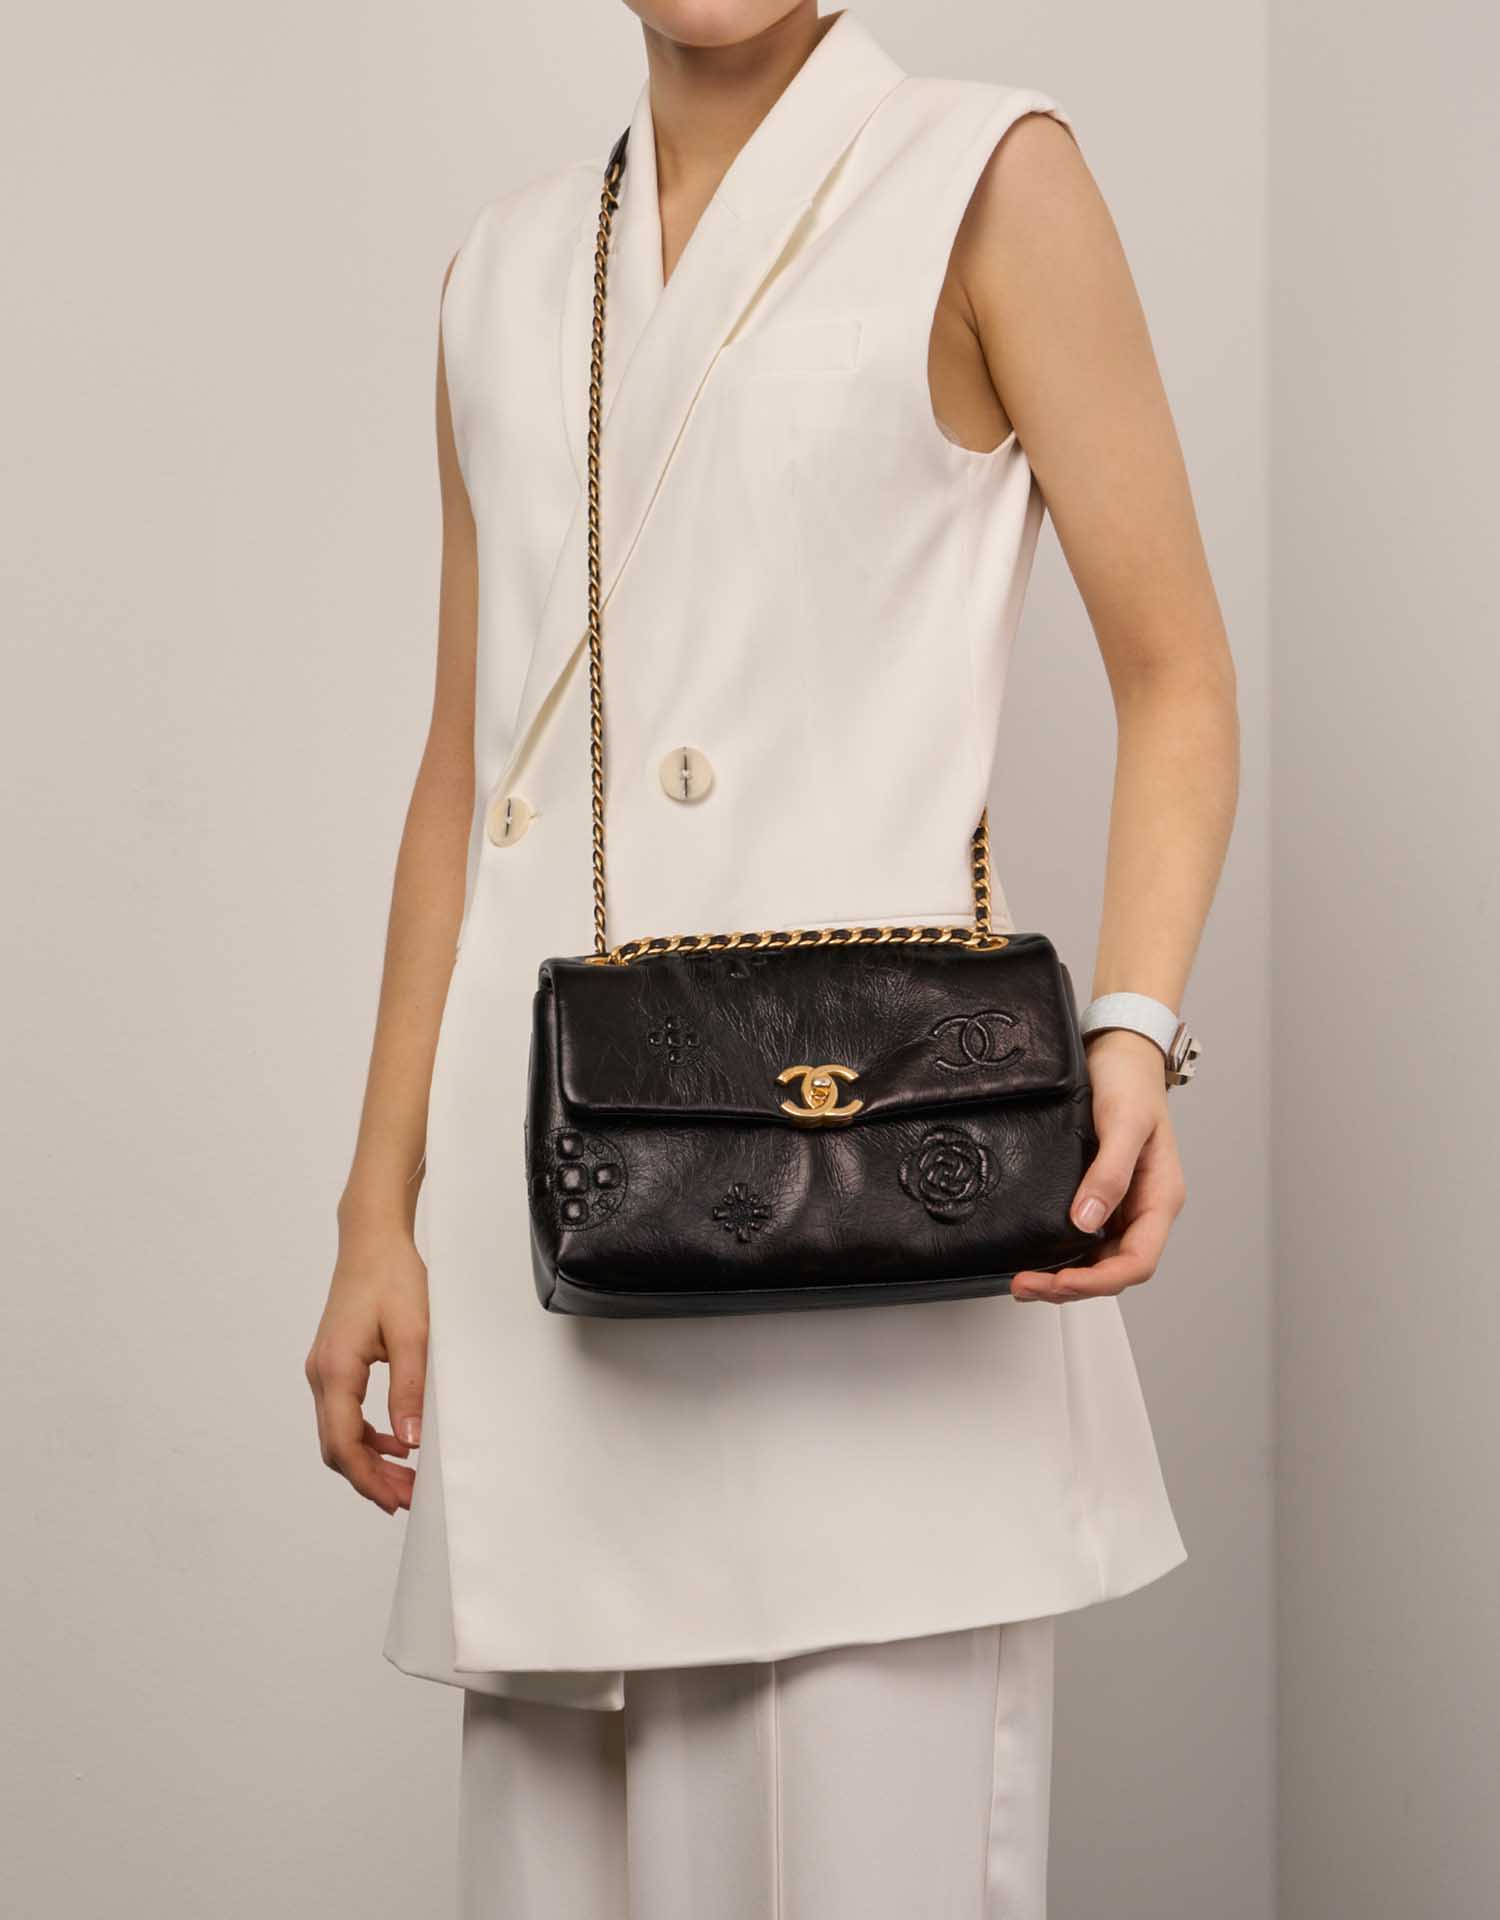 Chanel Timeless Medium Black Sizes Worn | Sell your designer bag on Saclab.com